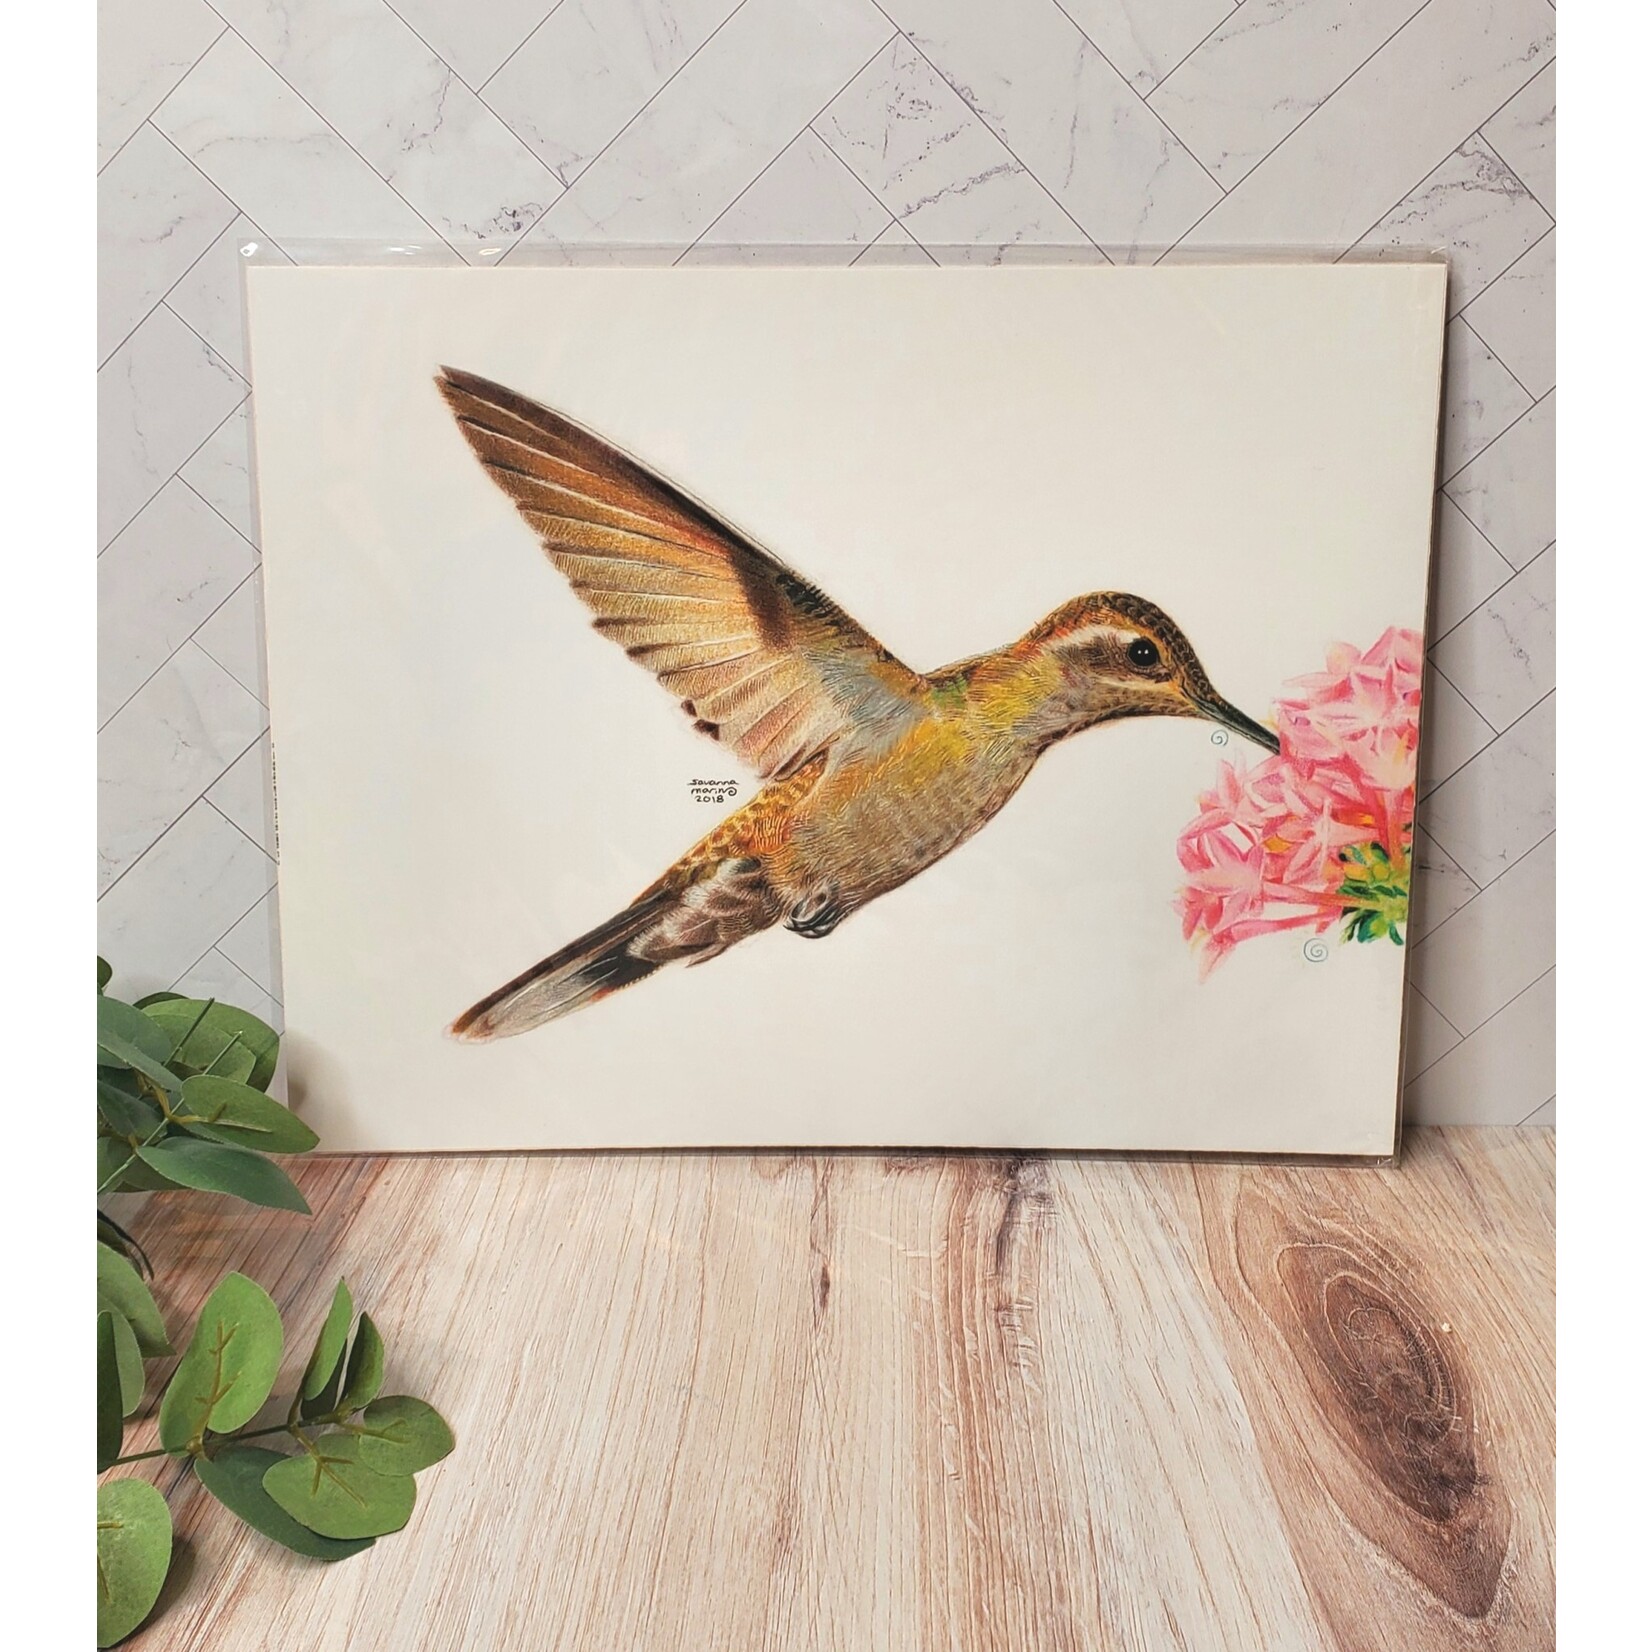 Savanna Marin Art "Hummingbird" - giclee print - 11x14"